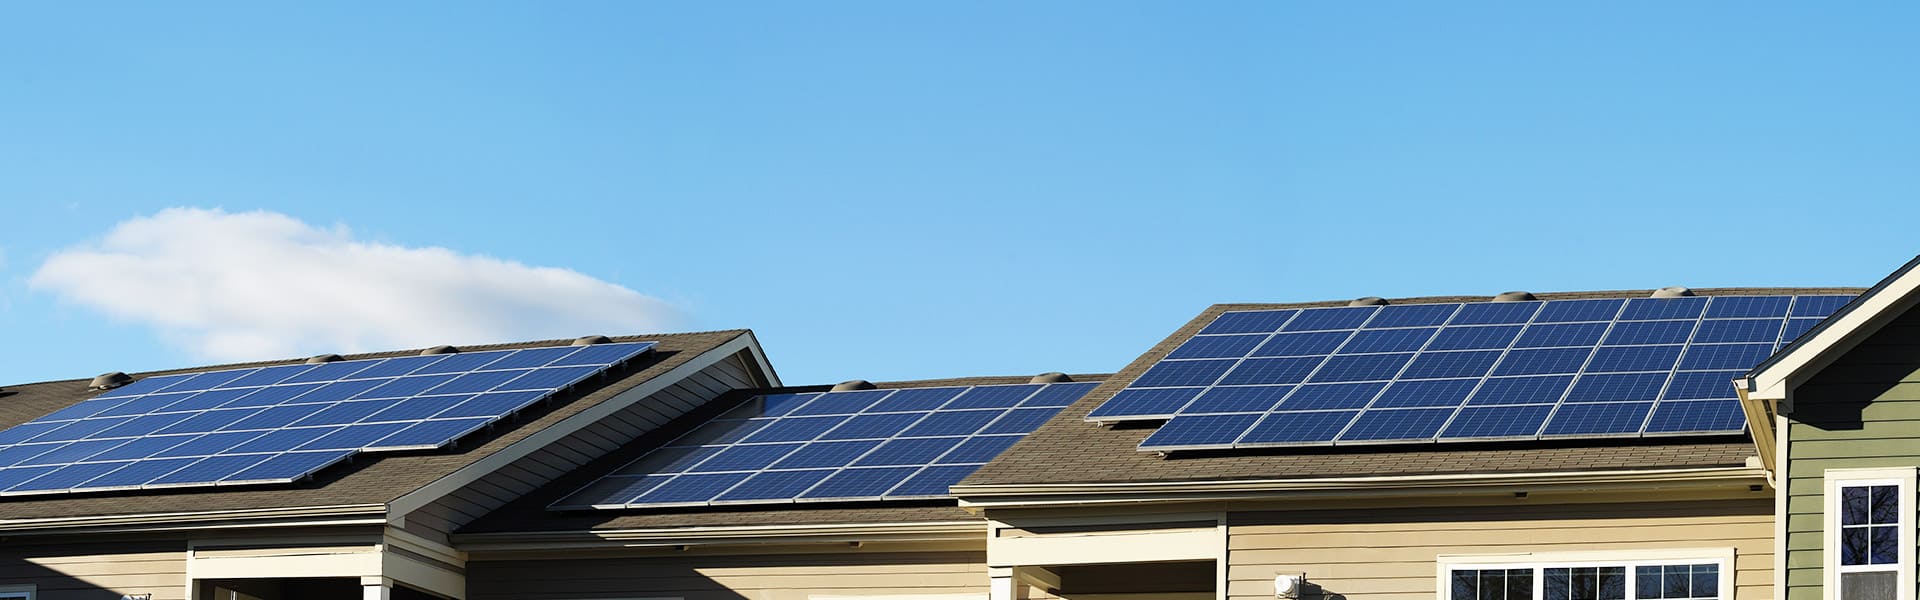 solar panel installation in central illinois